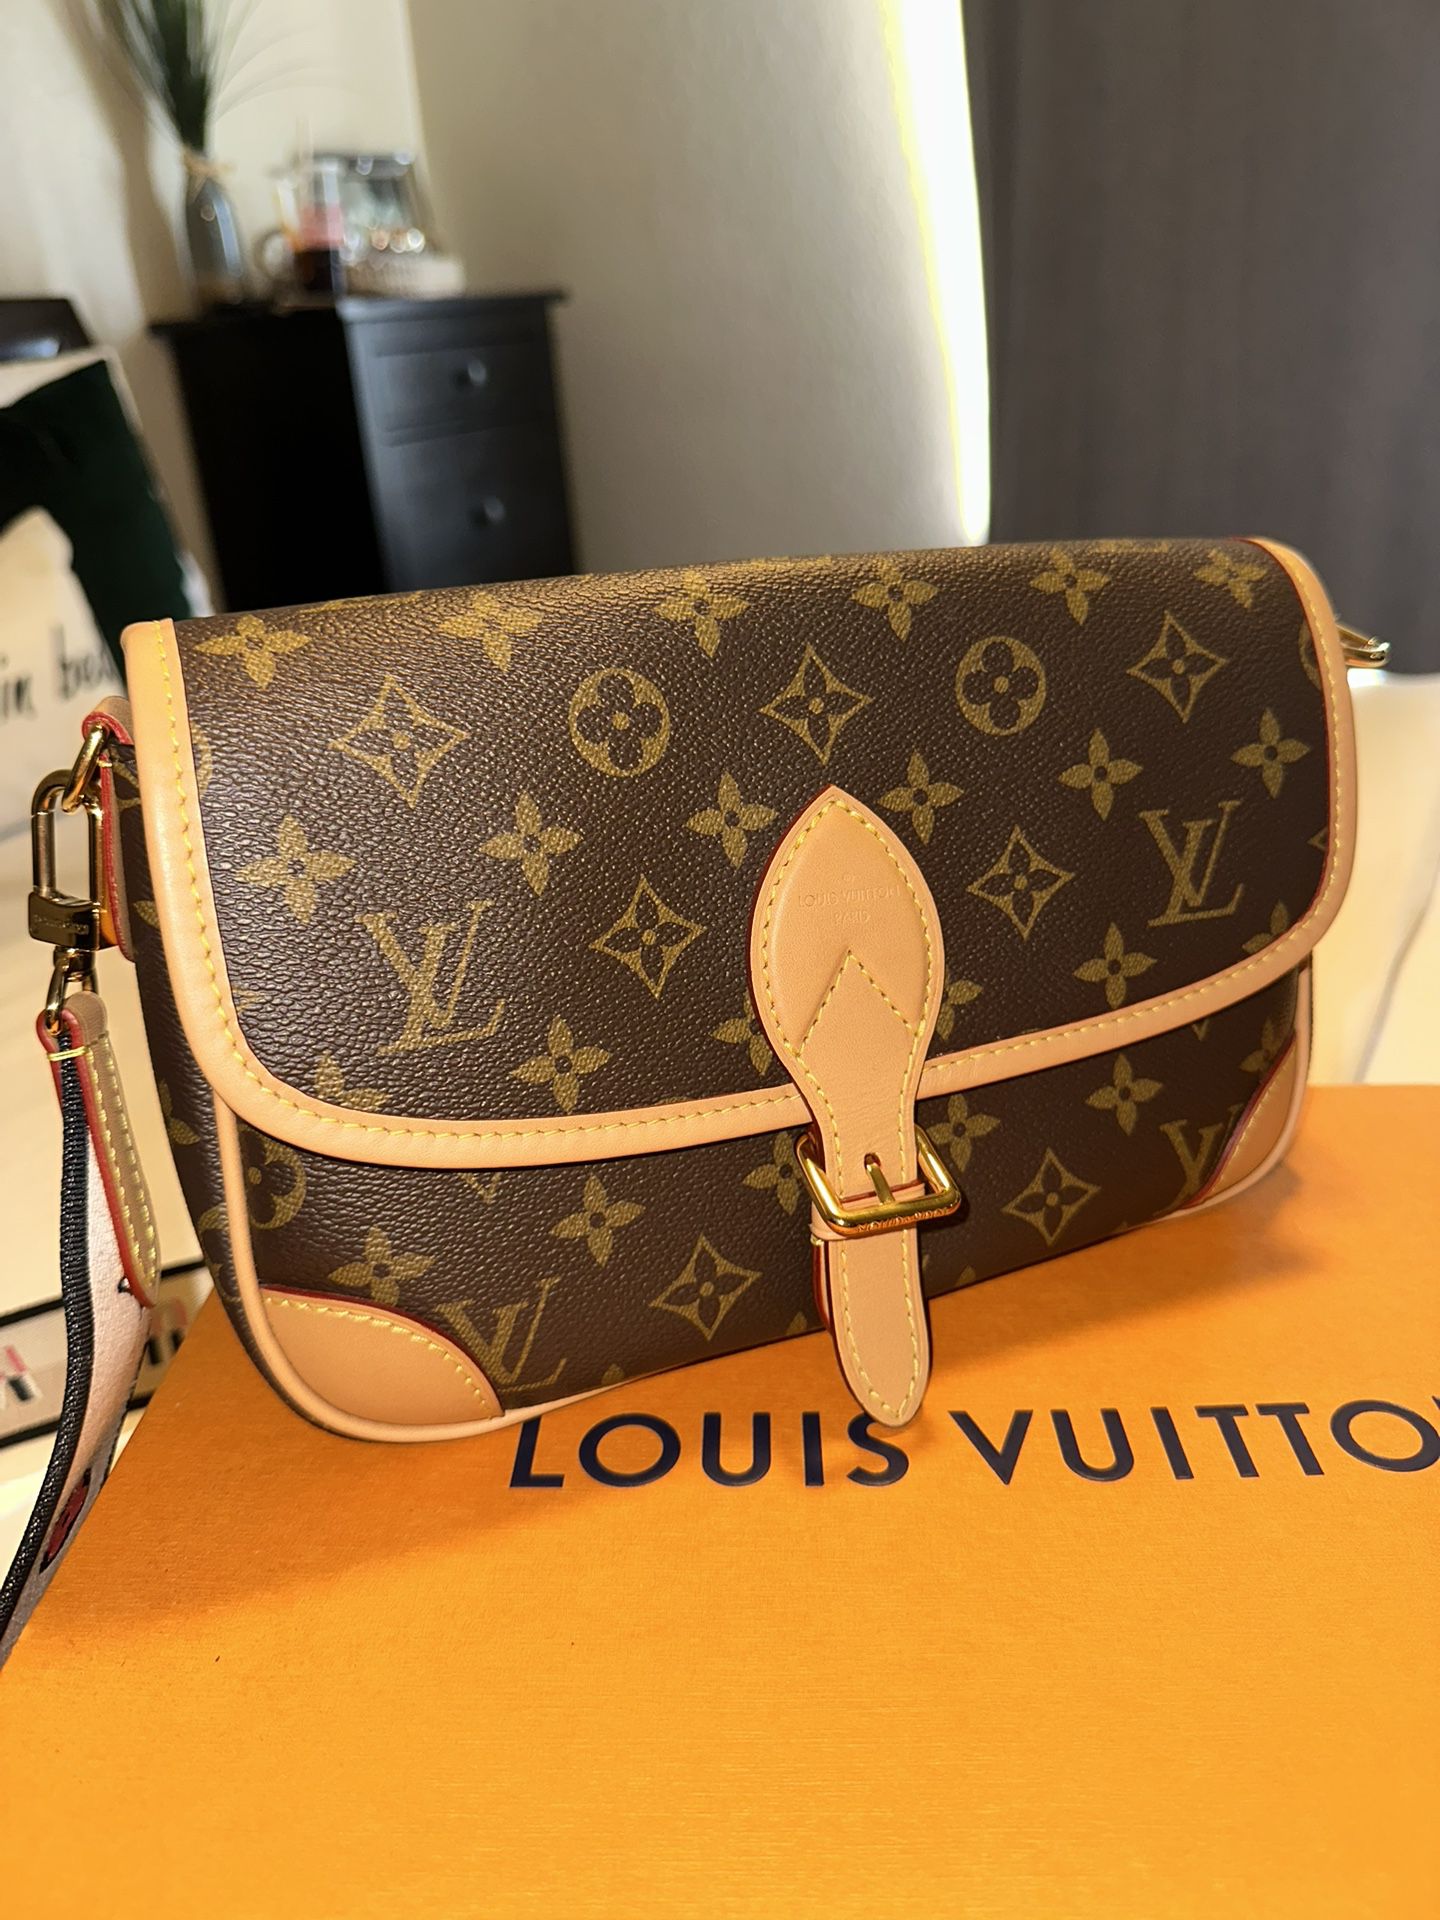 Louis Vuitton Purse for Sale in Chula Vista, CA - OfferUp